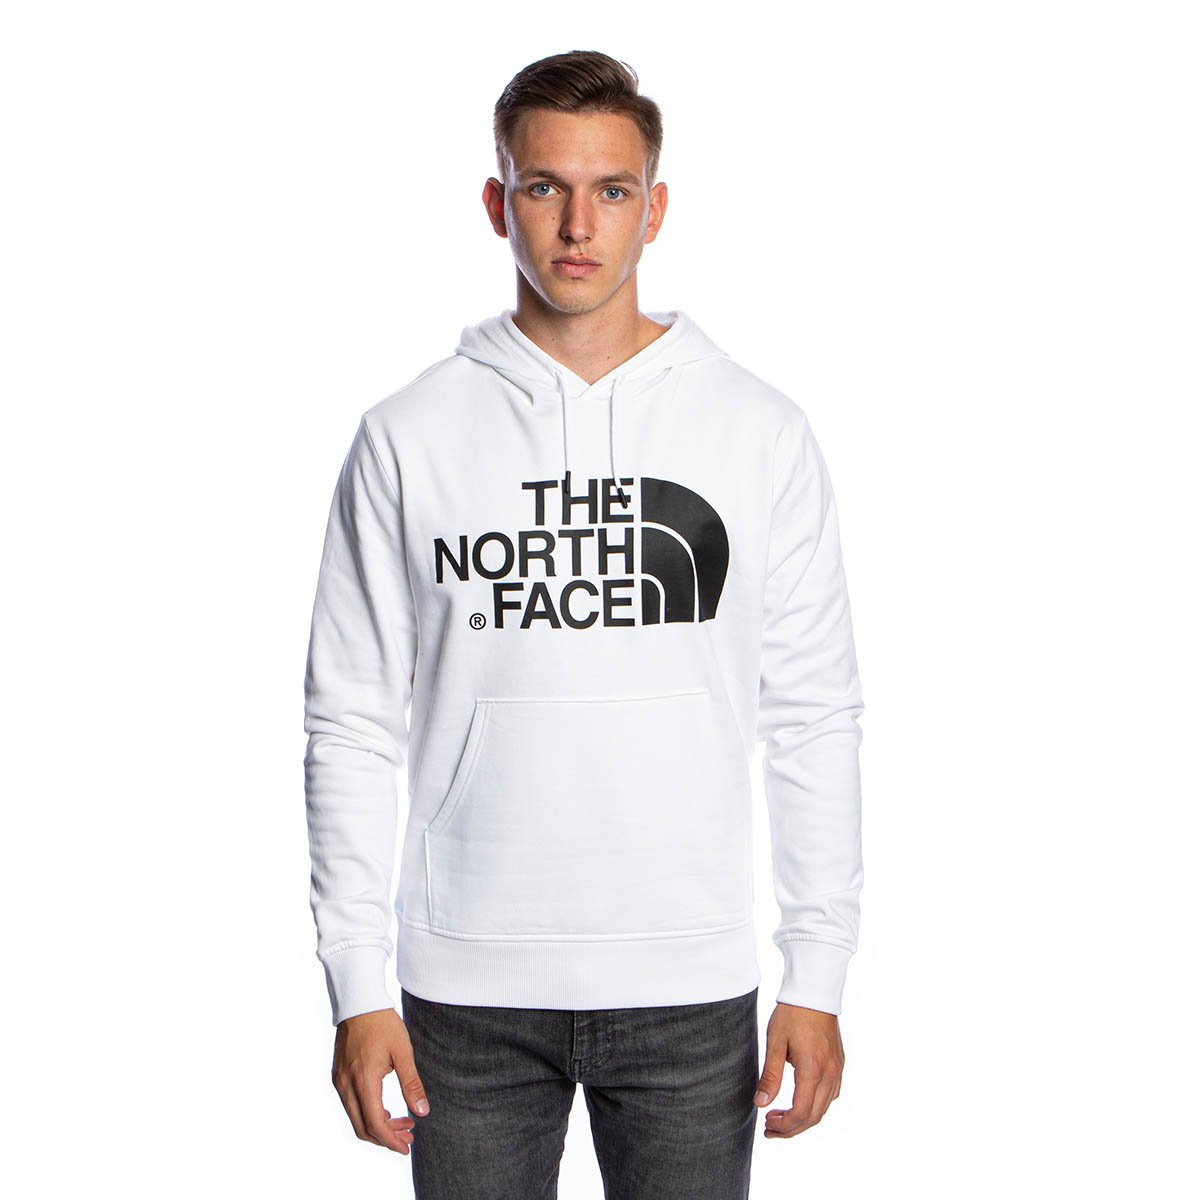 The North Face Sweatshirt Standard Hoodie white | Bludshop.com